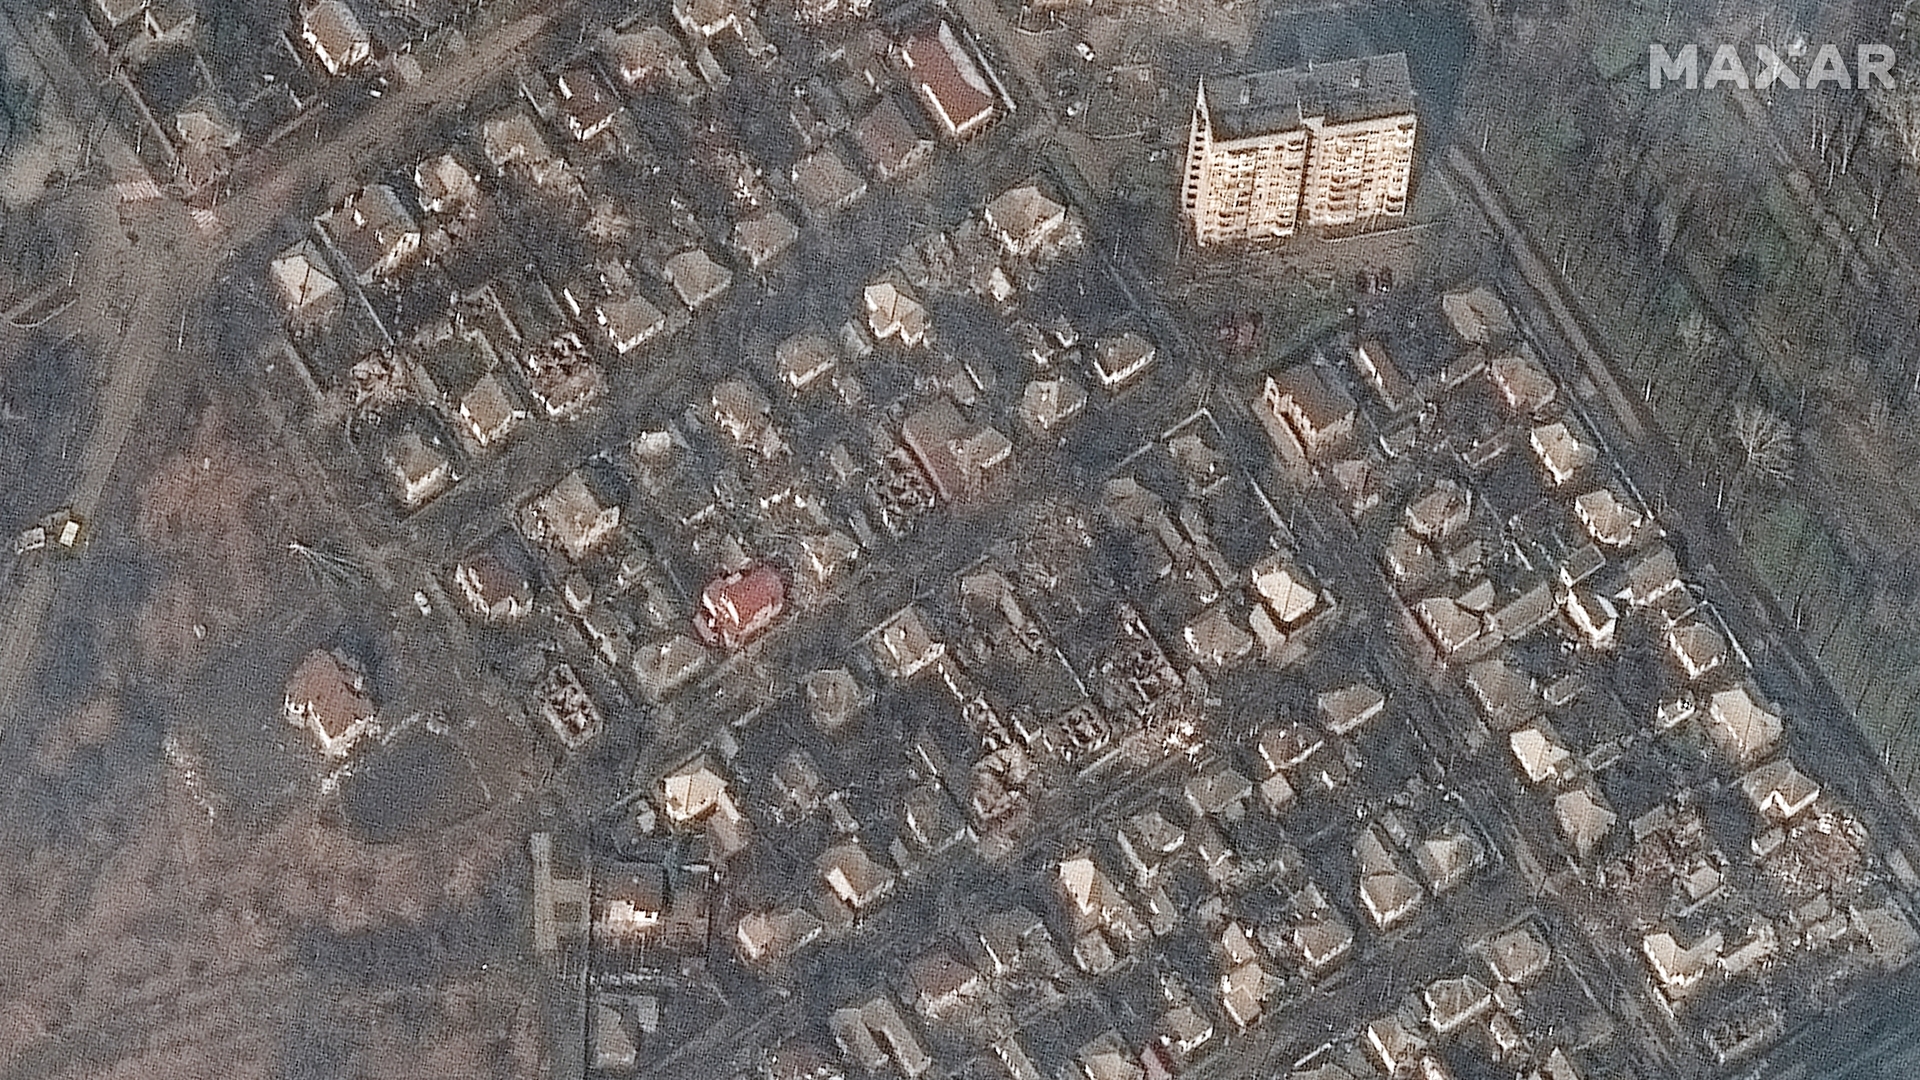 Damage in Mariupol